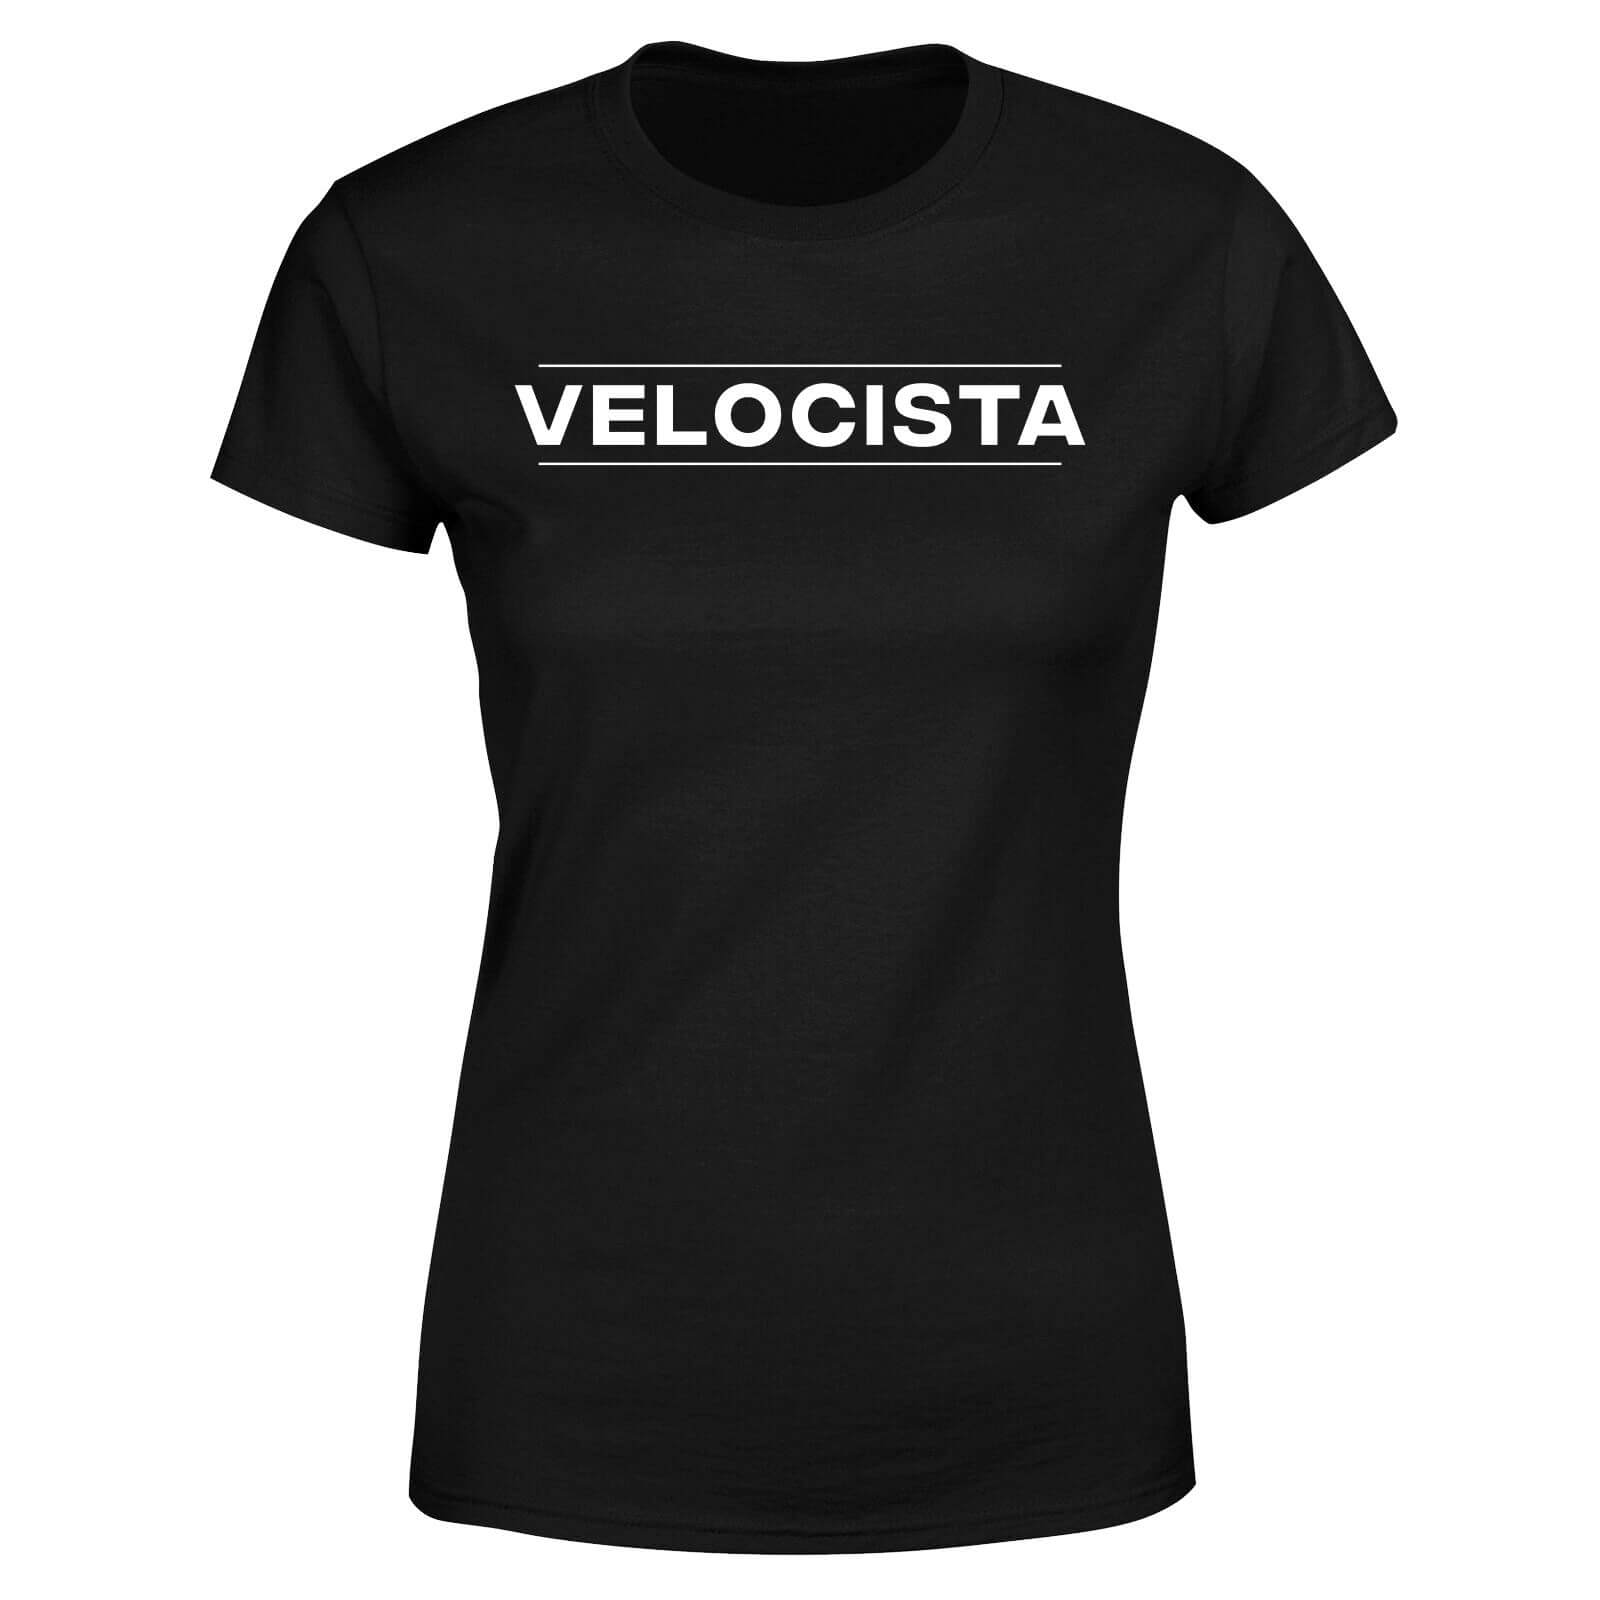 Velocista Women's T-Shirt - Black - 3XL - Black